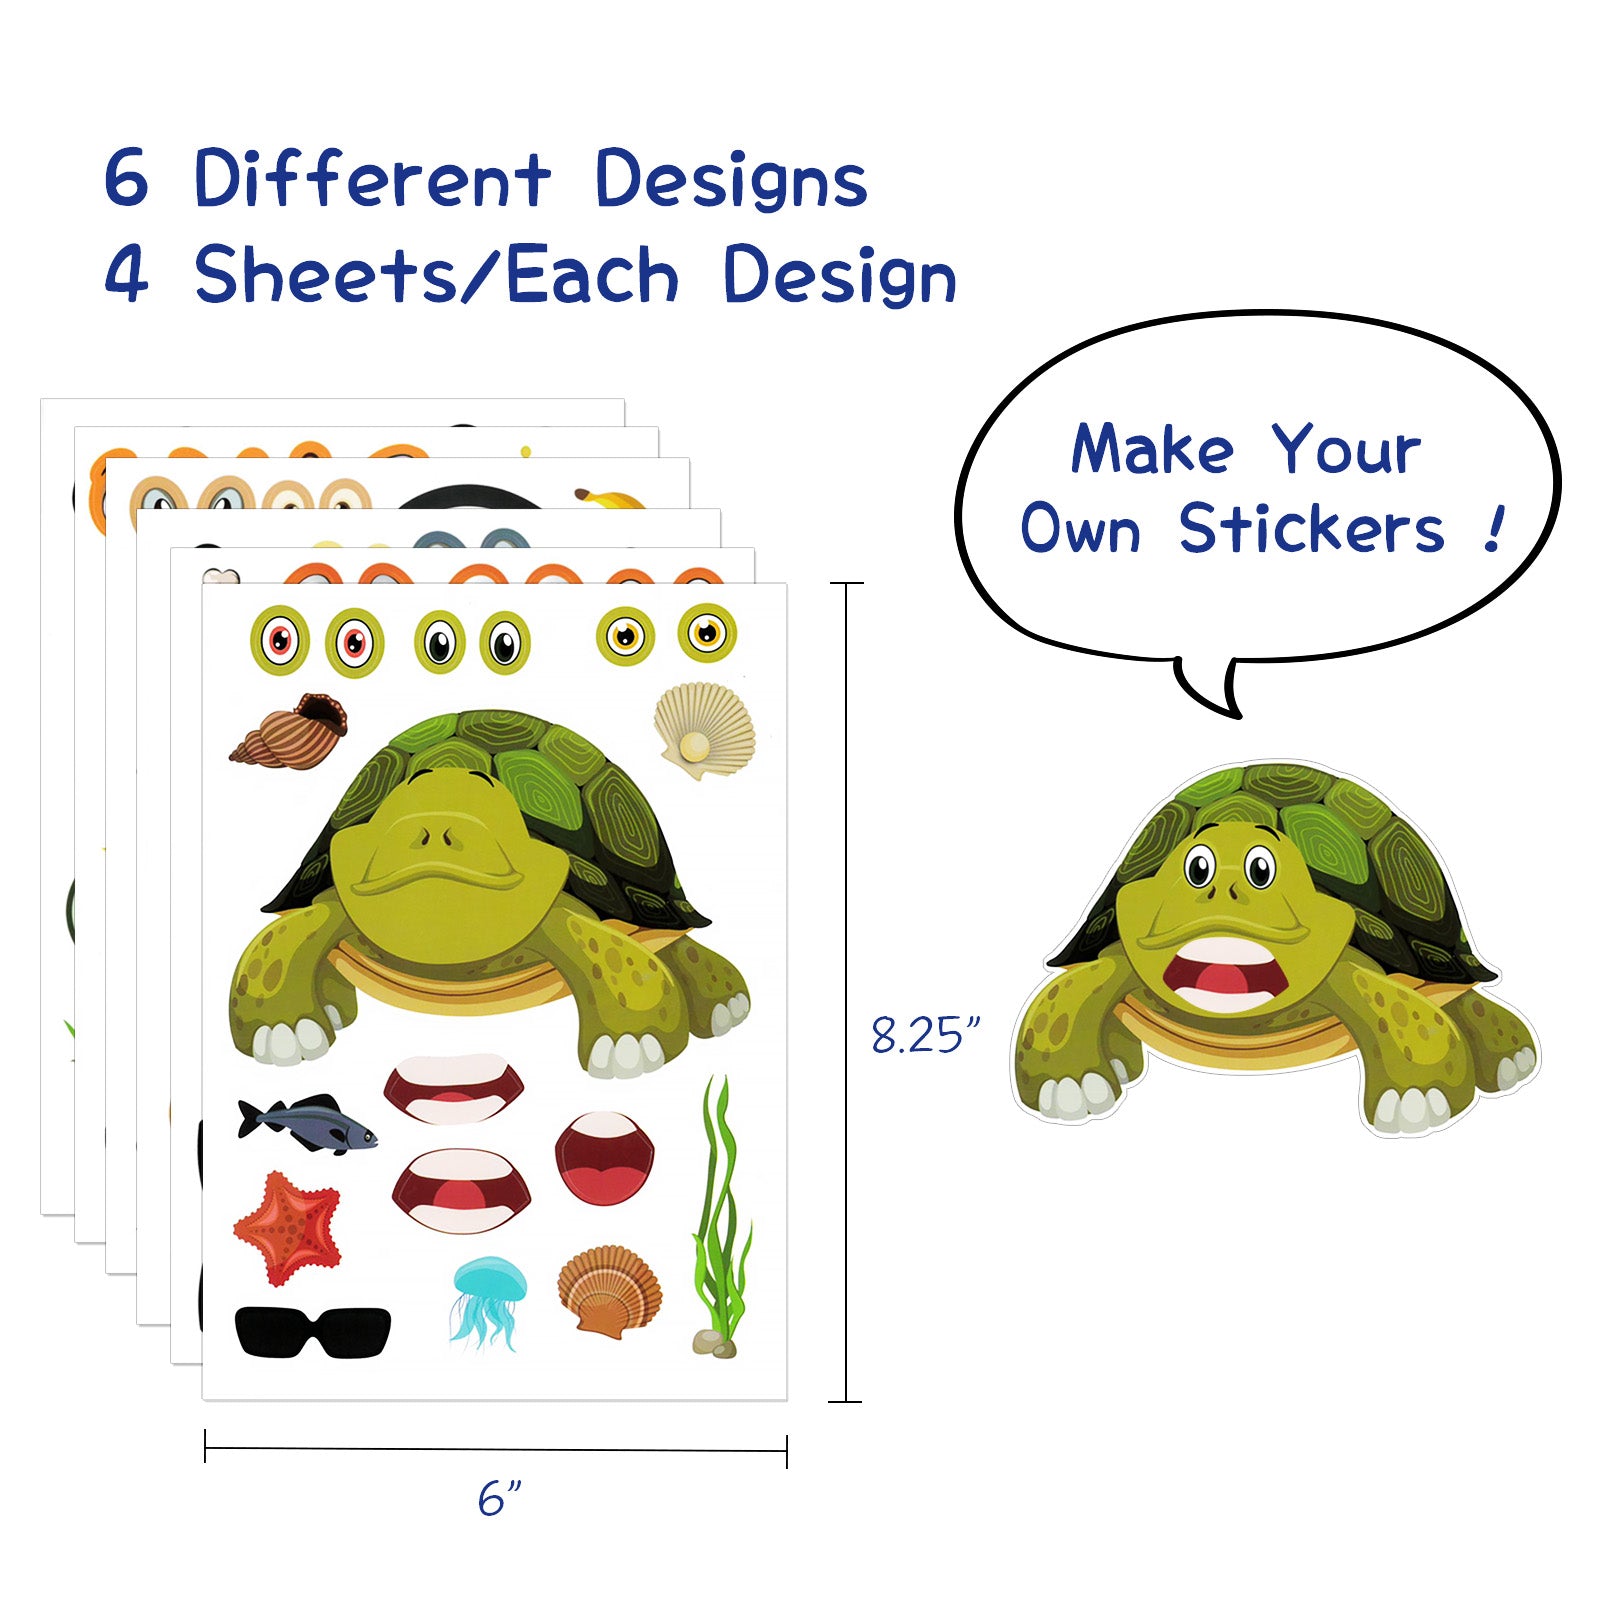 7pcs Bento Style Mixed Fabric Stickers DIY Creative Self-adhesive Stickers